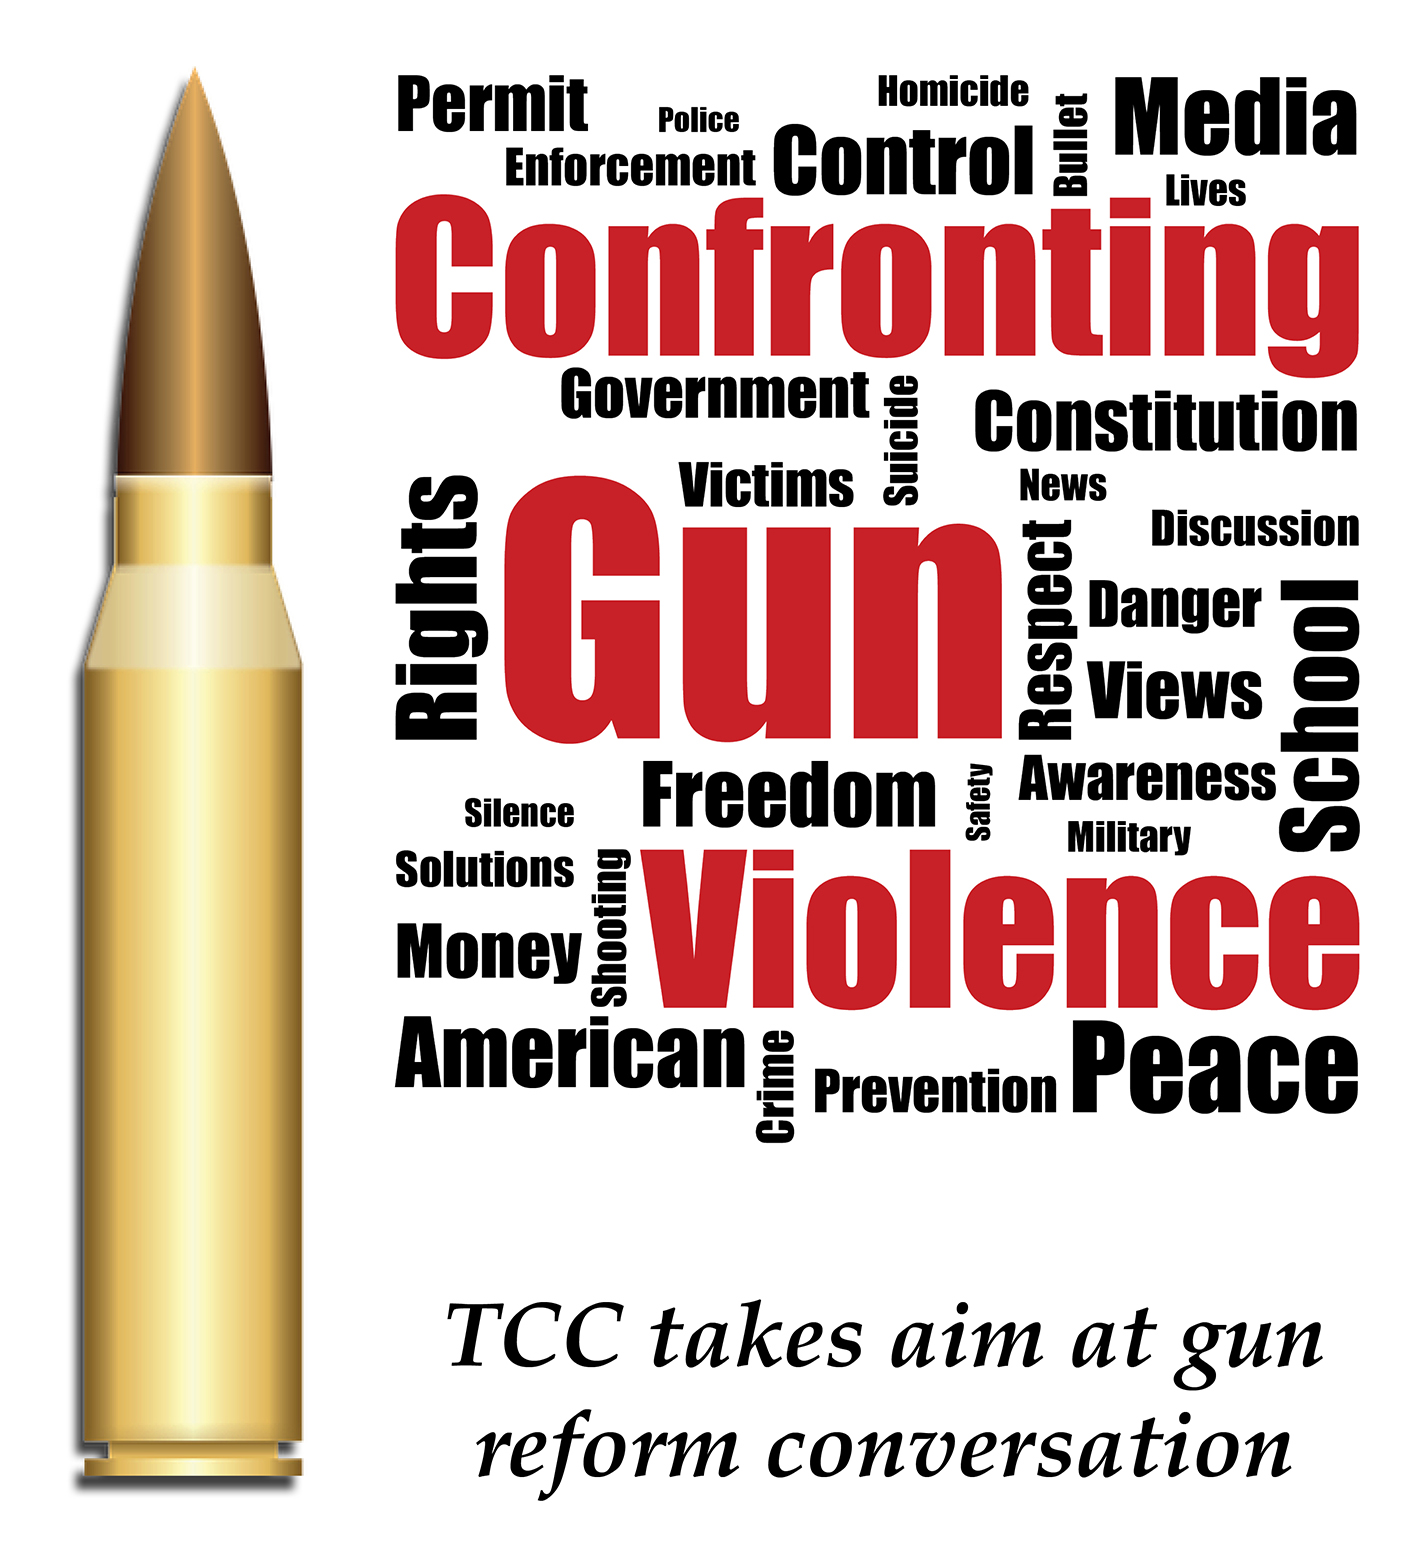 Confronting Gun Violence